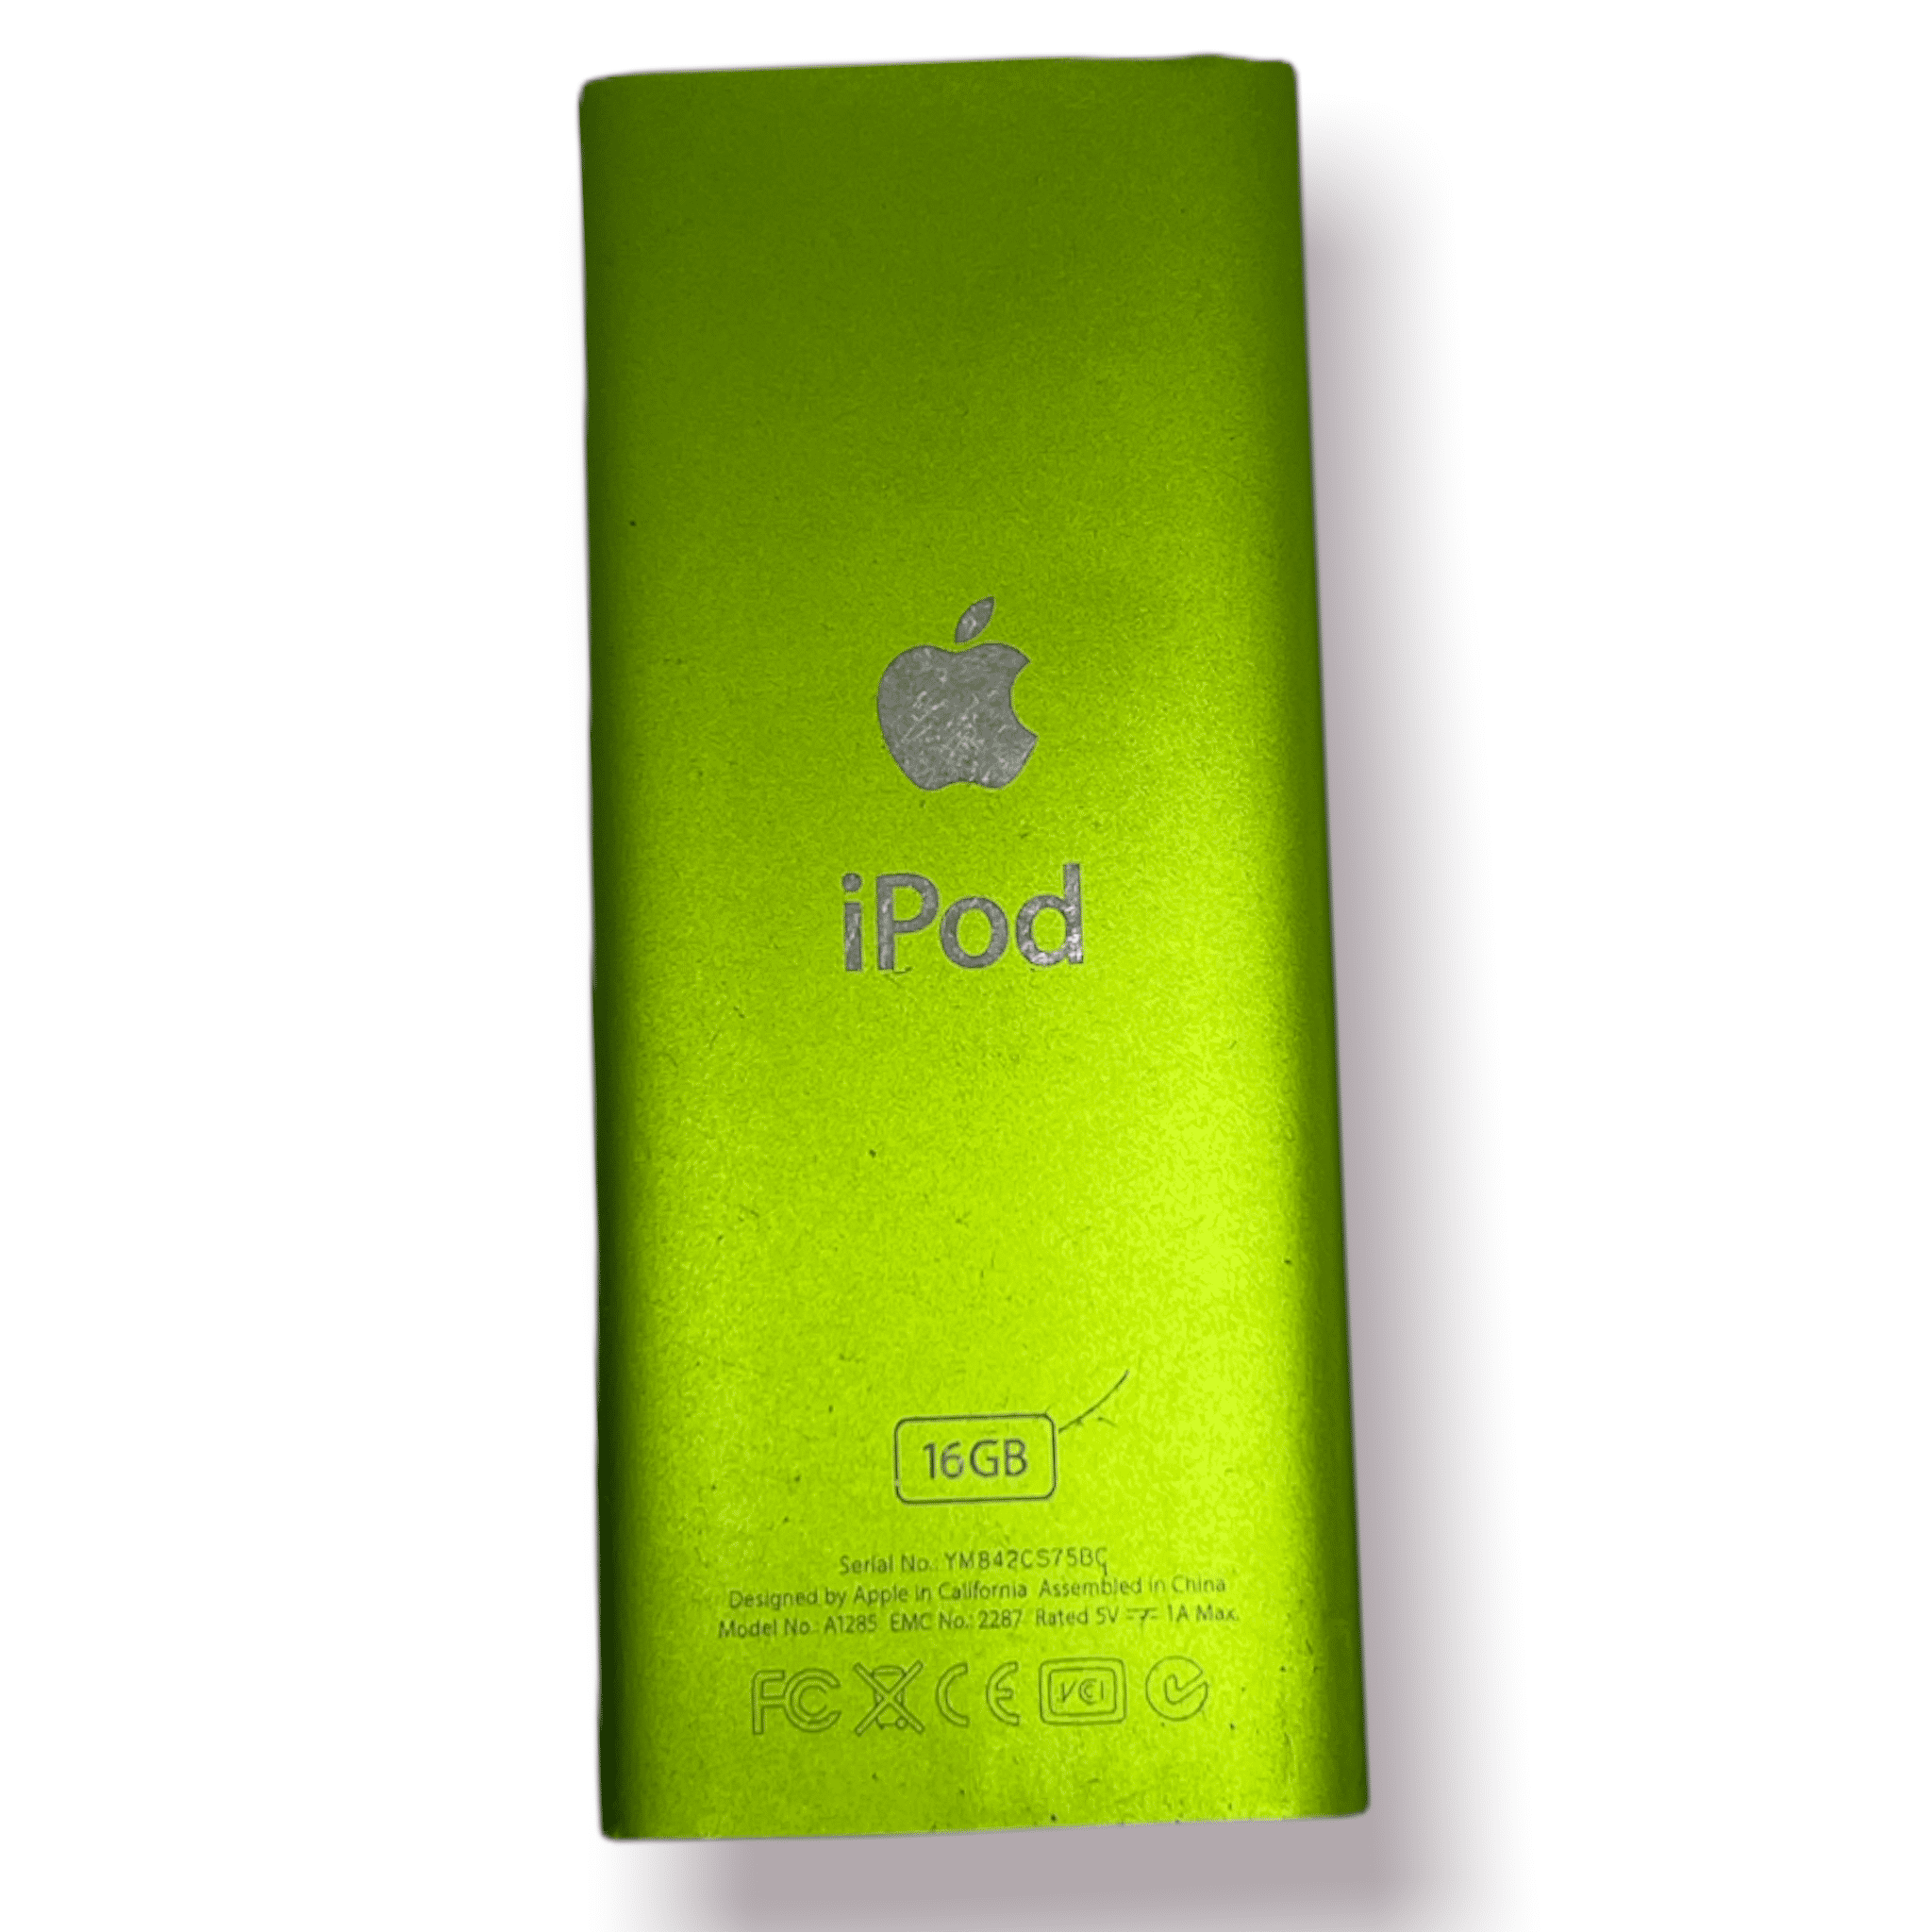 Apple iPod Nano 4th Gen 16GB Green | MP3 Audio/Video Player | Used Very Good